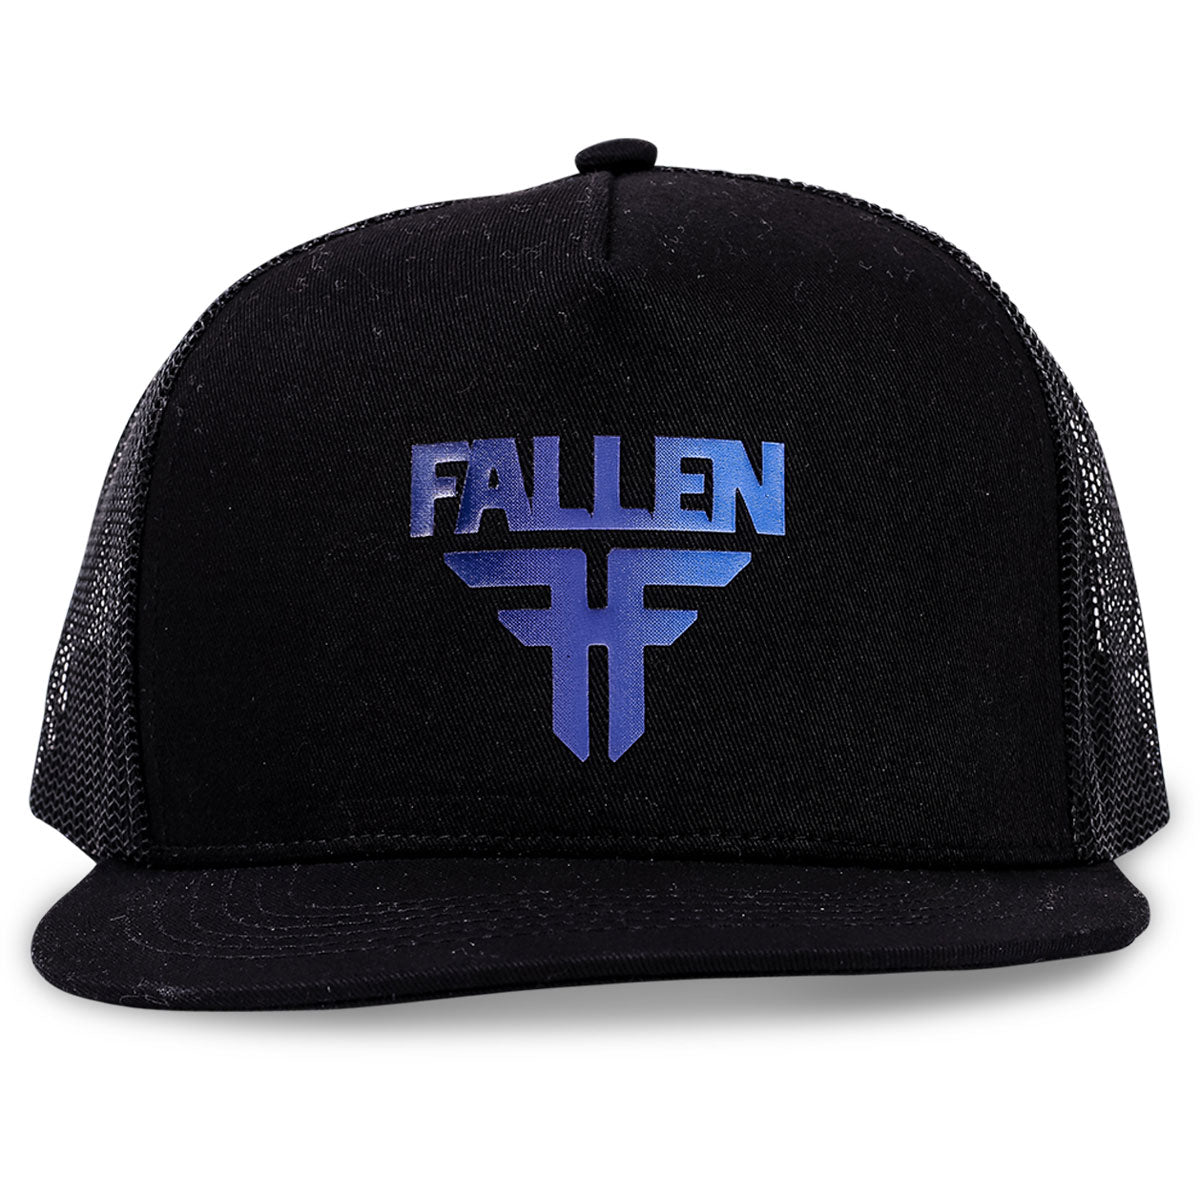 Fallen Insignia Flat Trucker Hat - Black/Blue Degree image 2